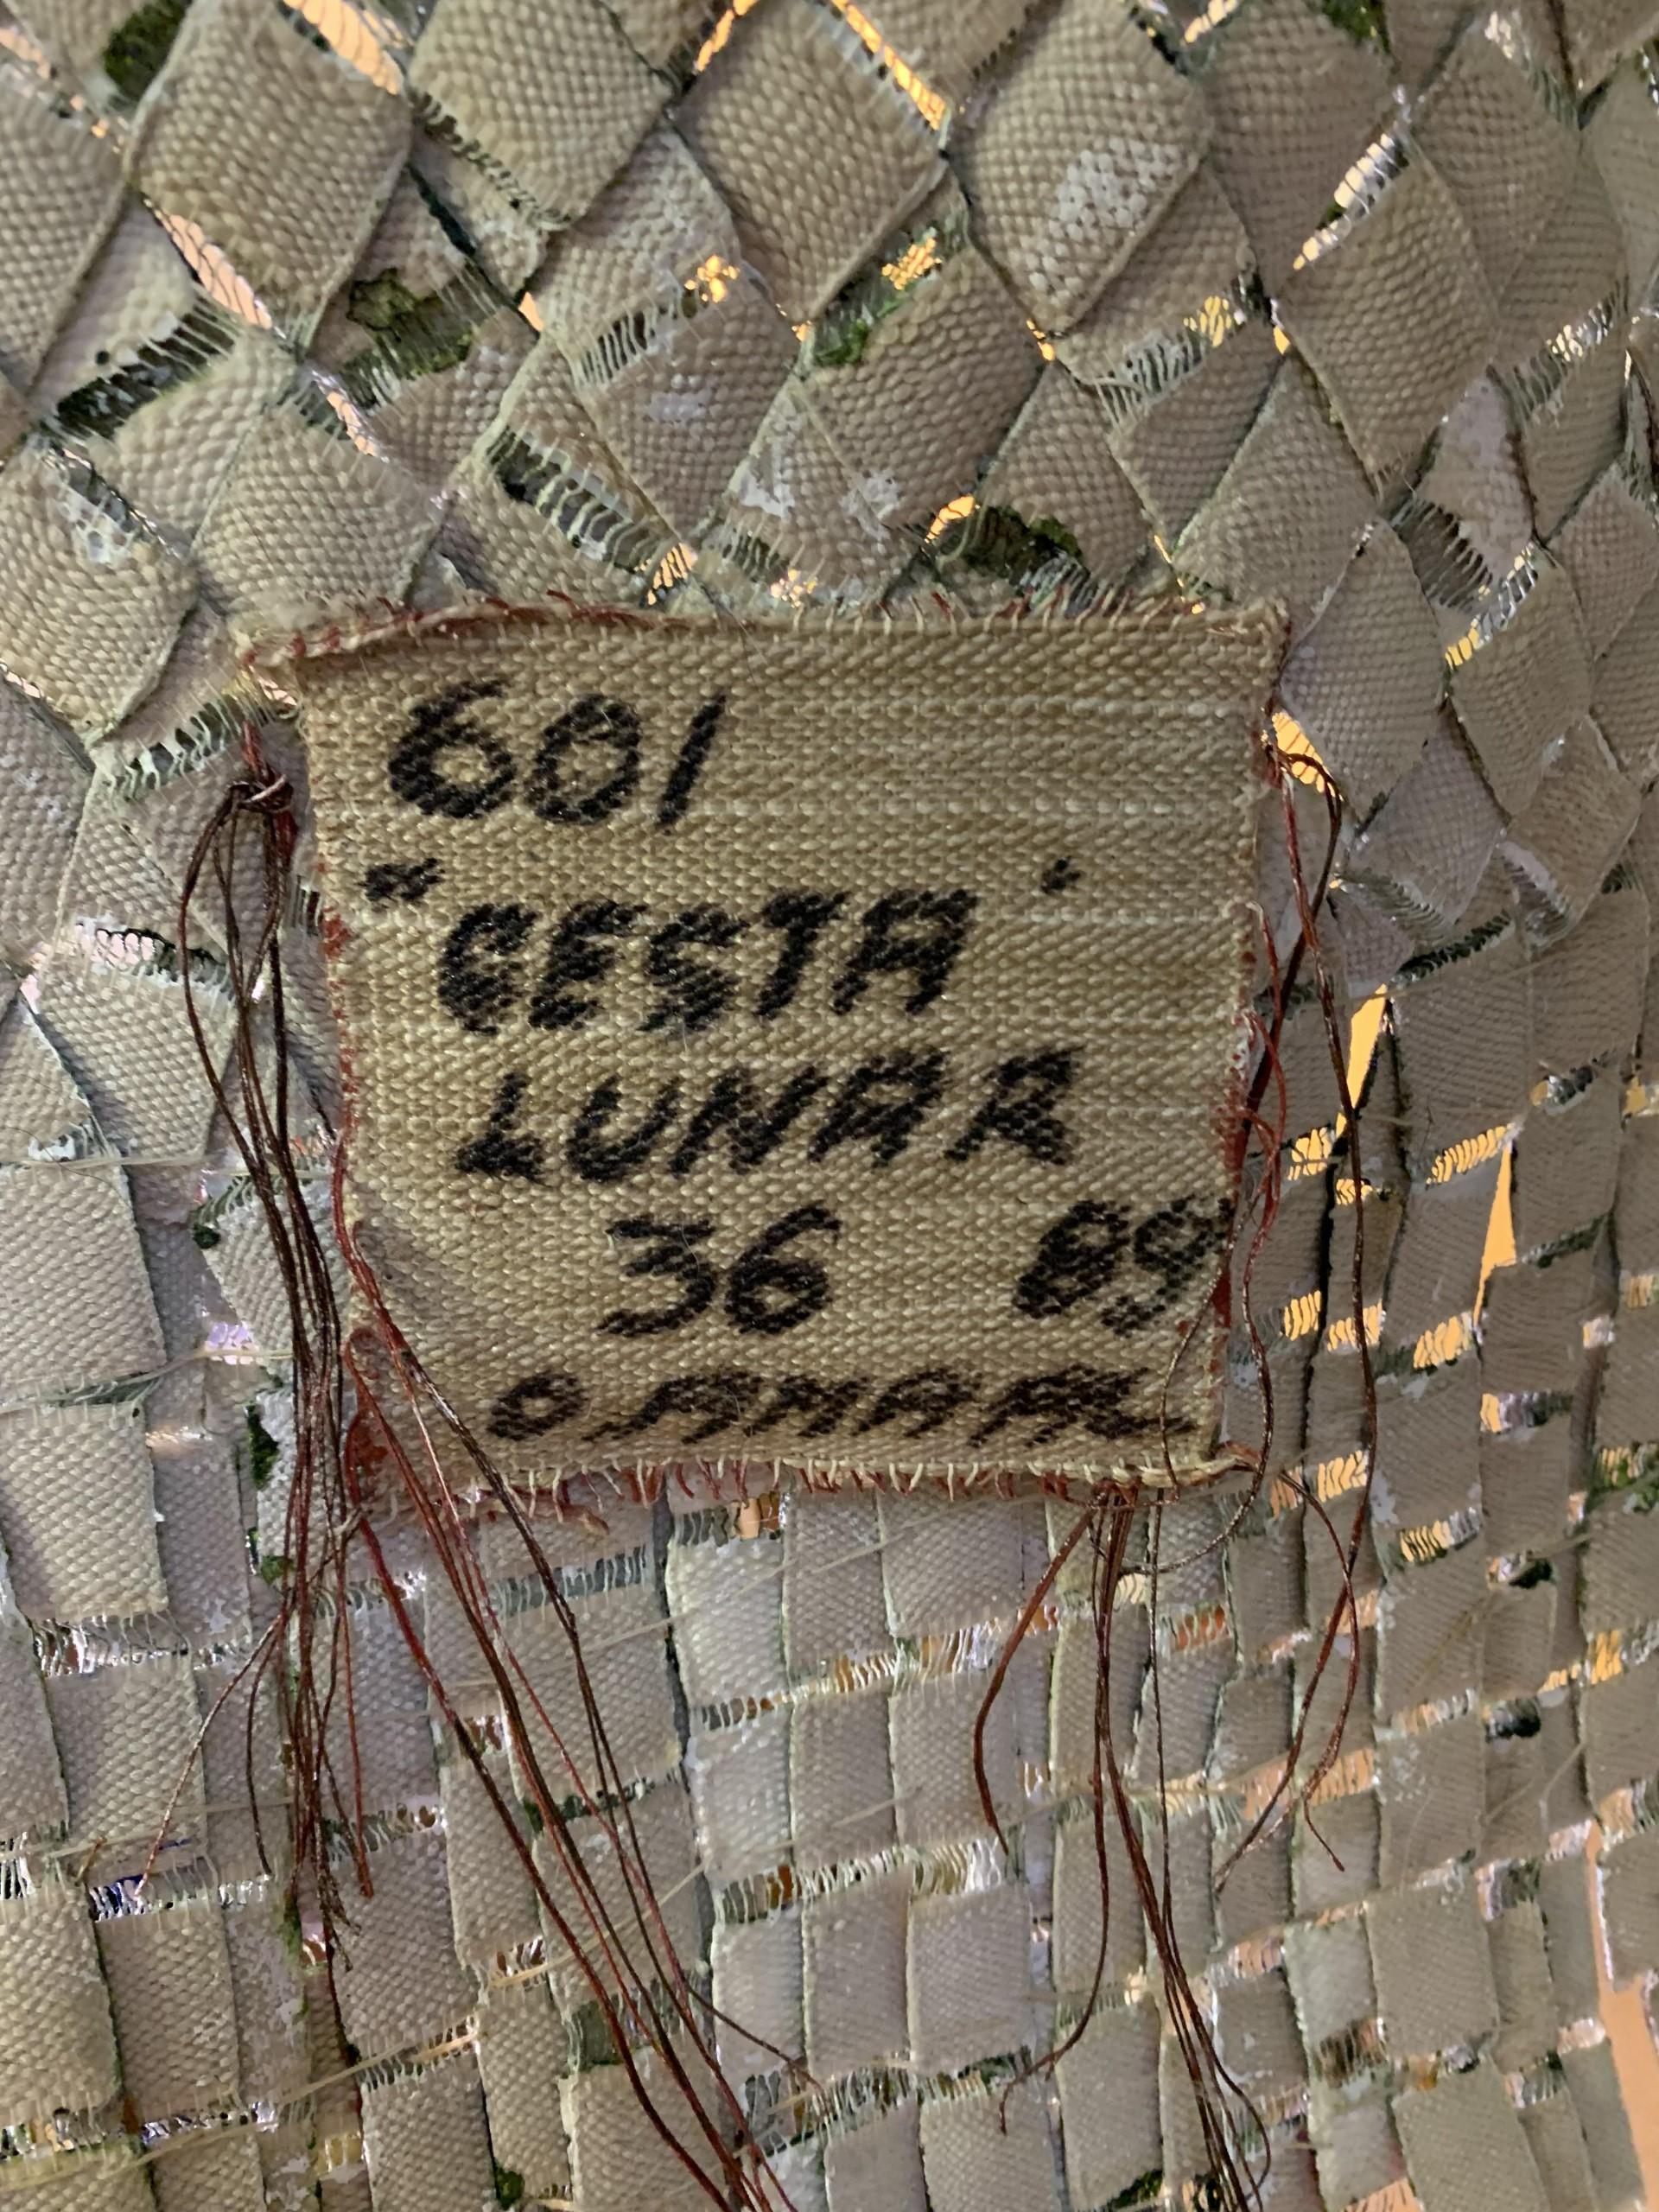 Olga de Amaral
Cesta Lunar 36
Linen, gesso, acrylic gold leaf, silver
reference no. 601
1989
59